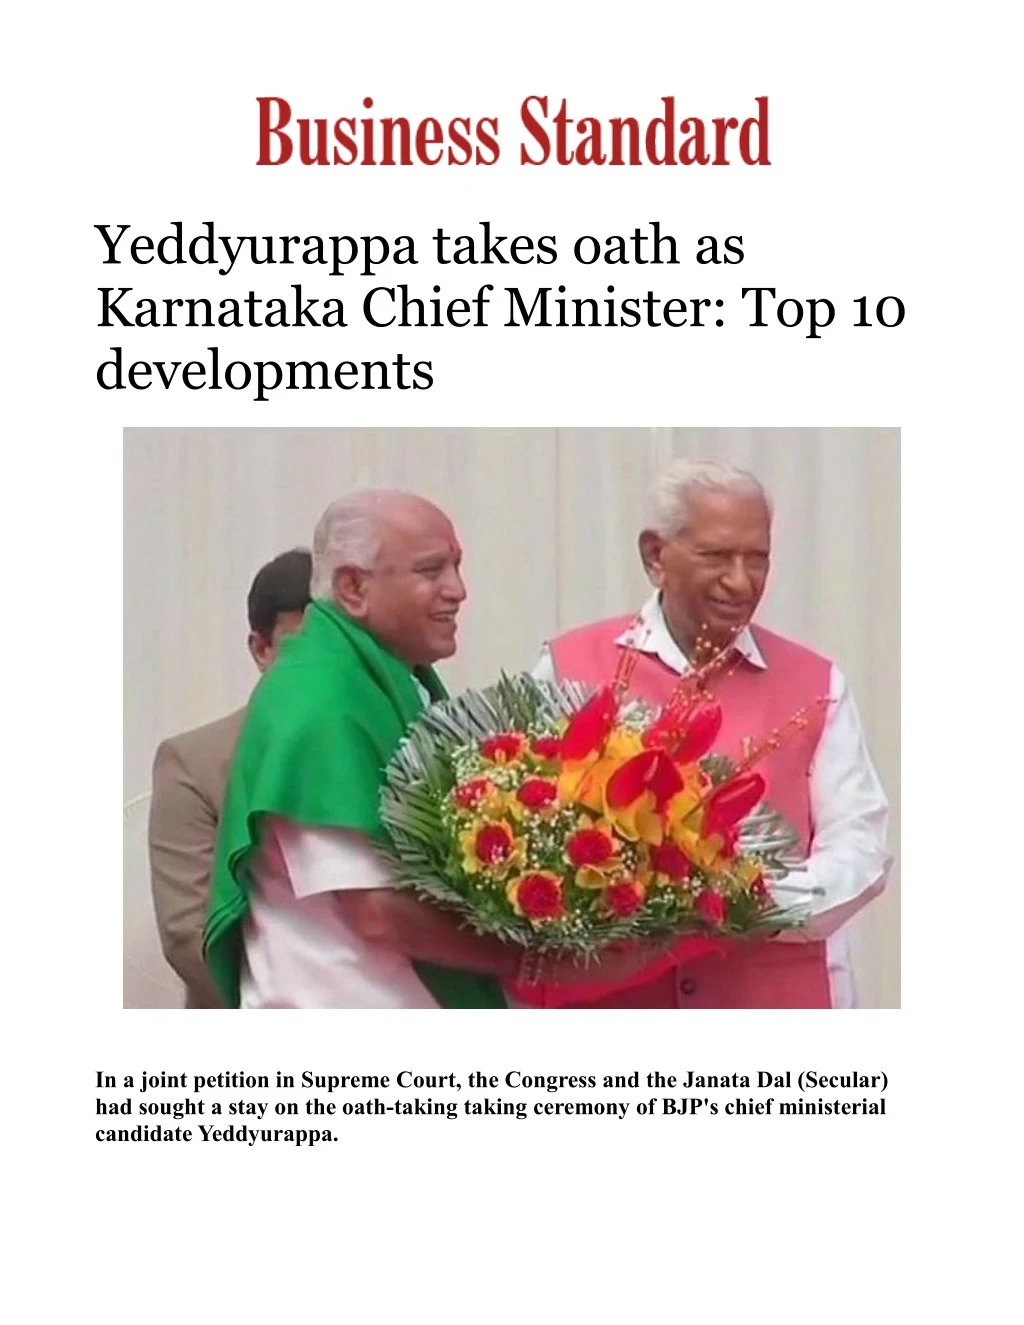 yeddyurappa takes oath as karnataka chief